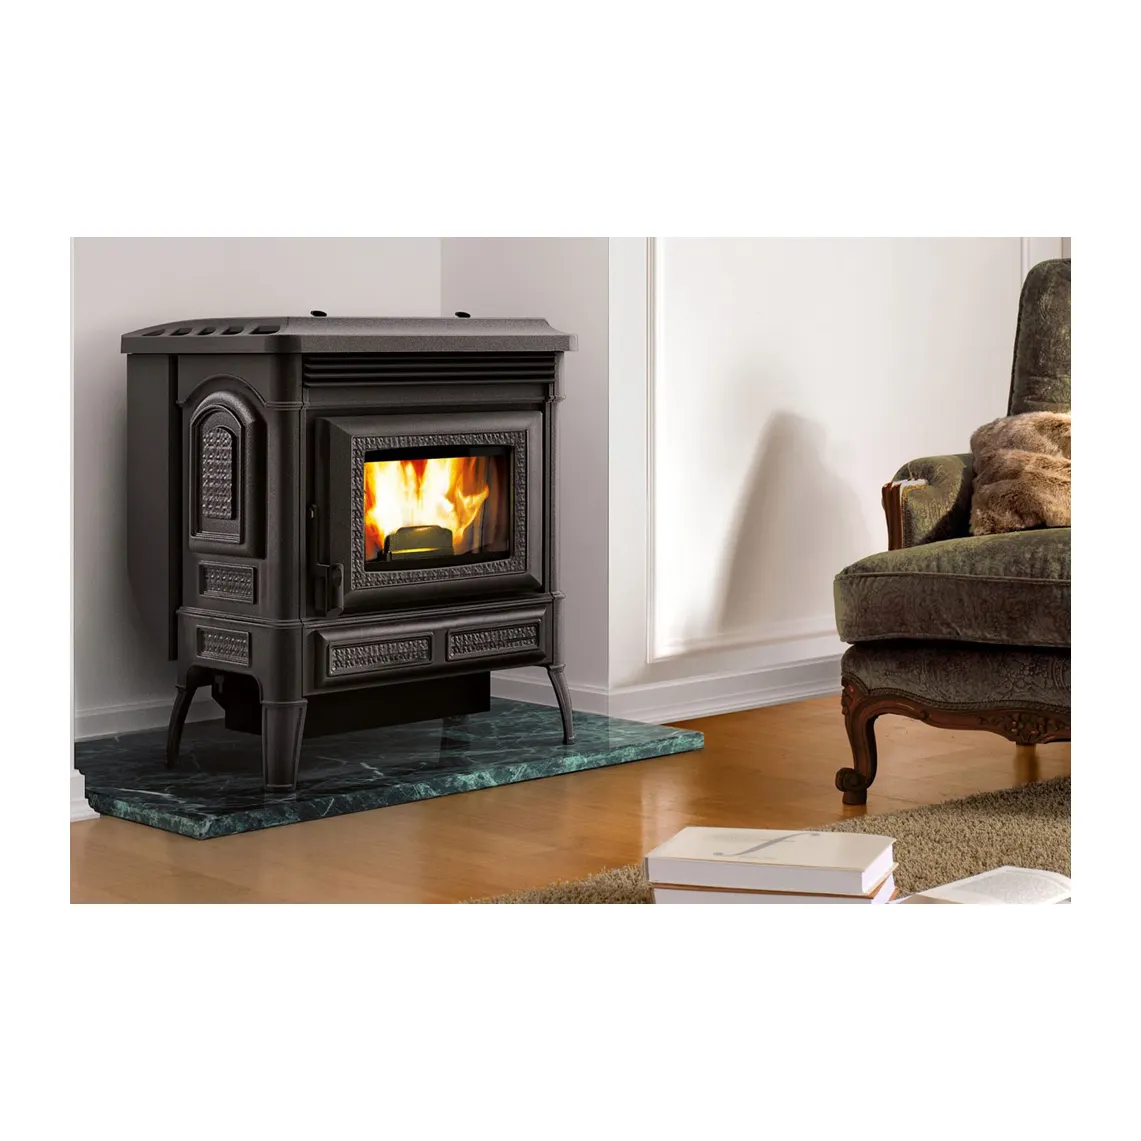 Round Indoor Wood Pellet Heater estufe de Pellet Stove Fireplace Fire Heater for Home Use